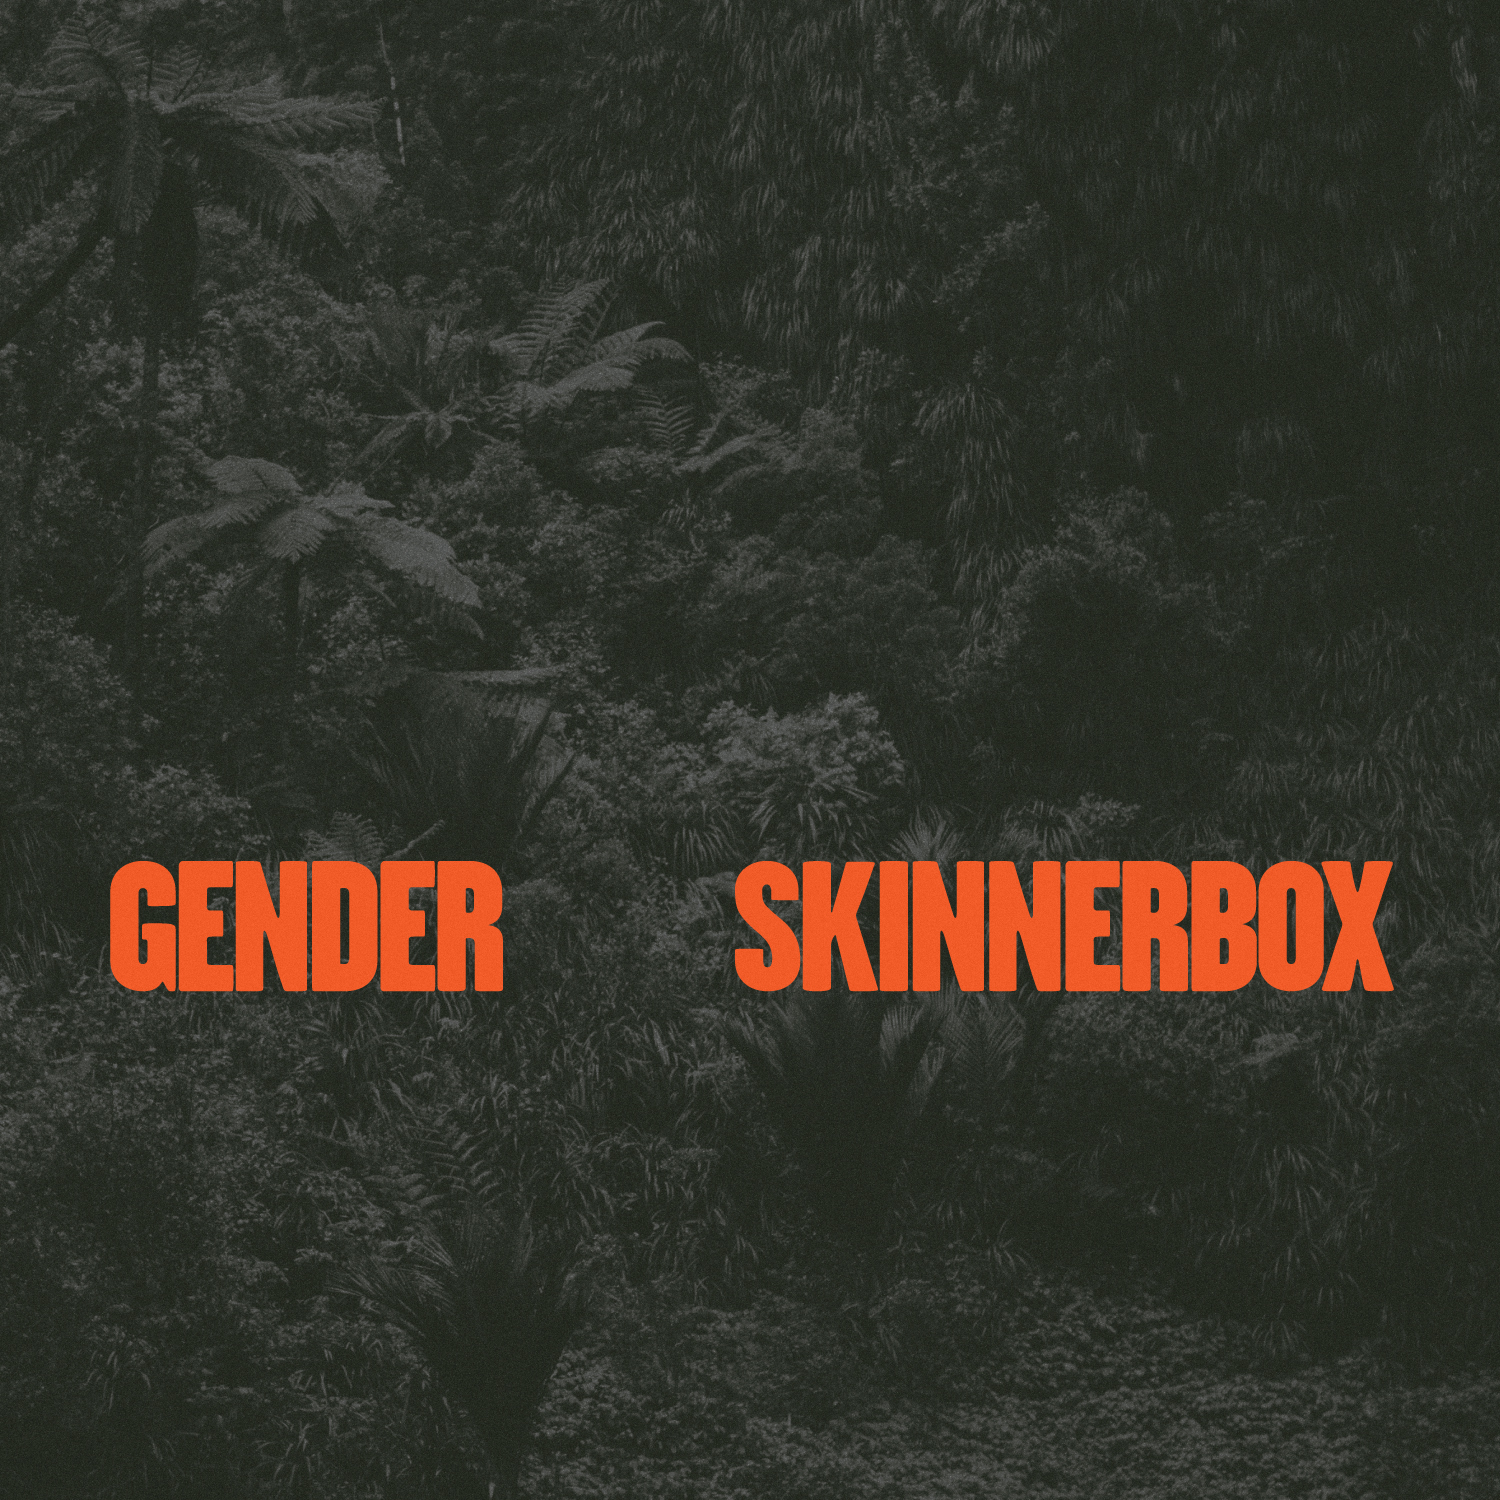 डाउनलोड करा Skinnerbox - Gender (Original Mix)